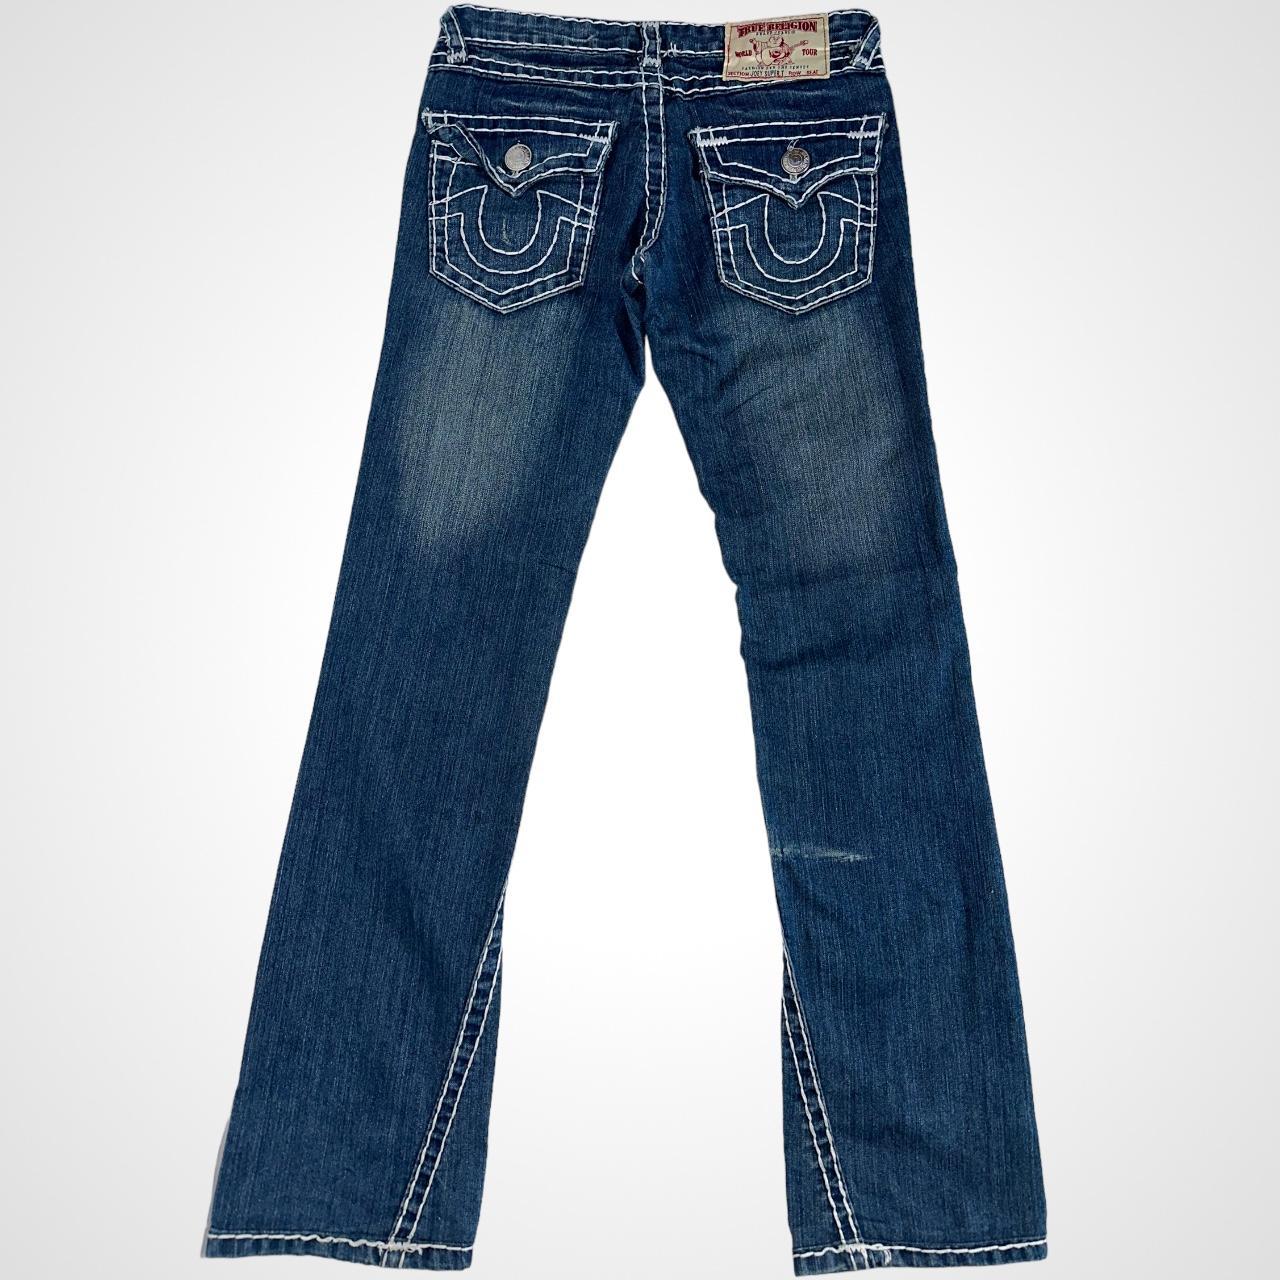 True Religion Joey Jeans Girls Sz 5 Boot Cut Pants Good Condition RN 112790  P-48